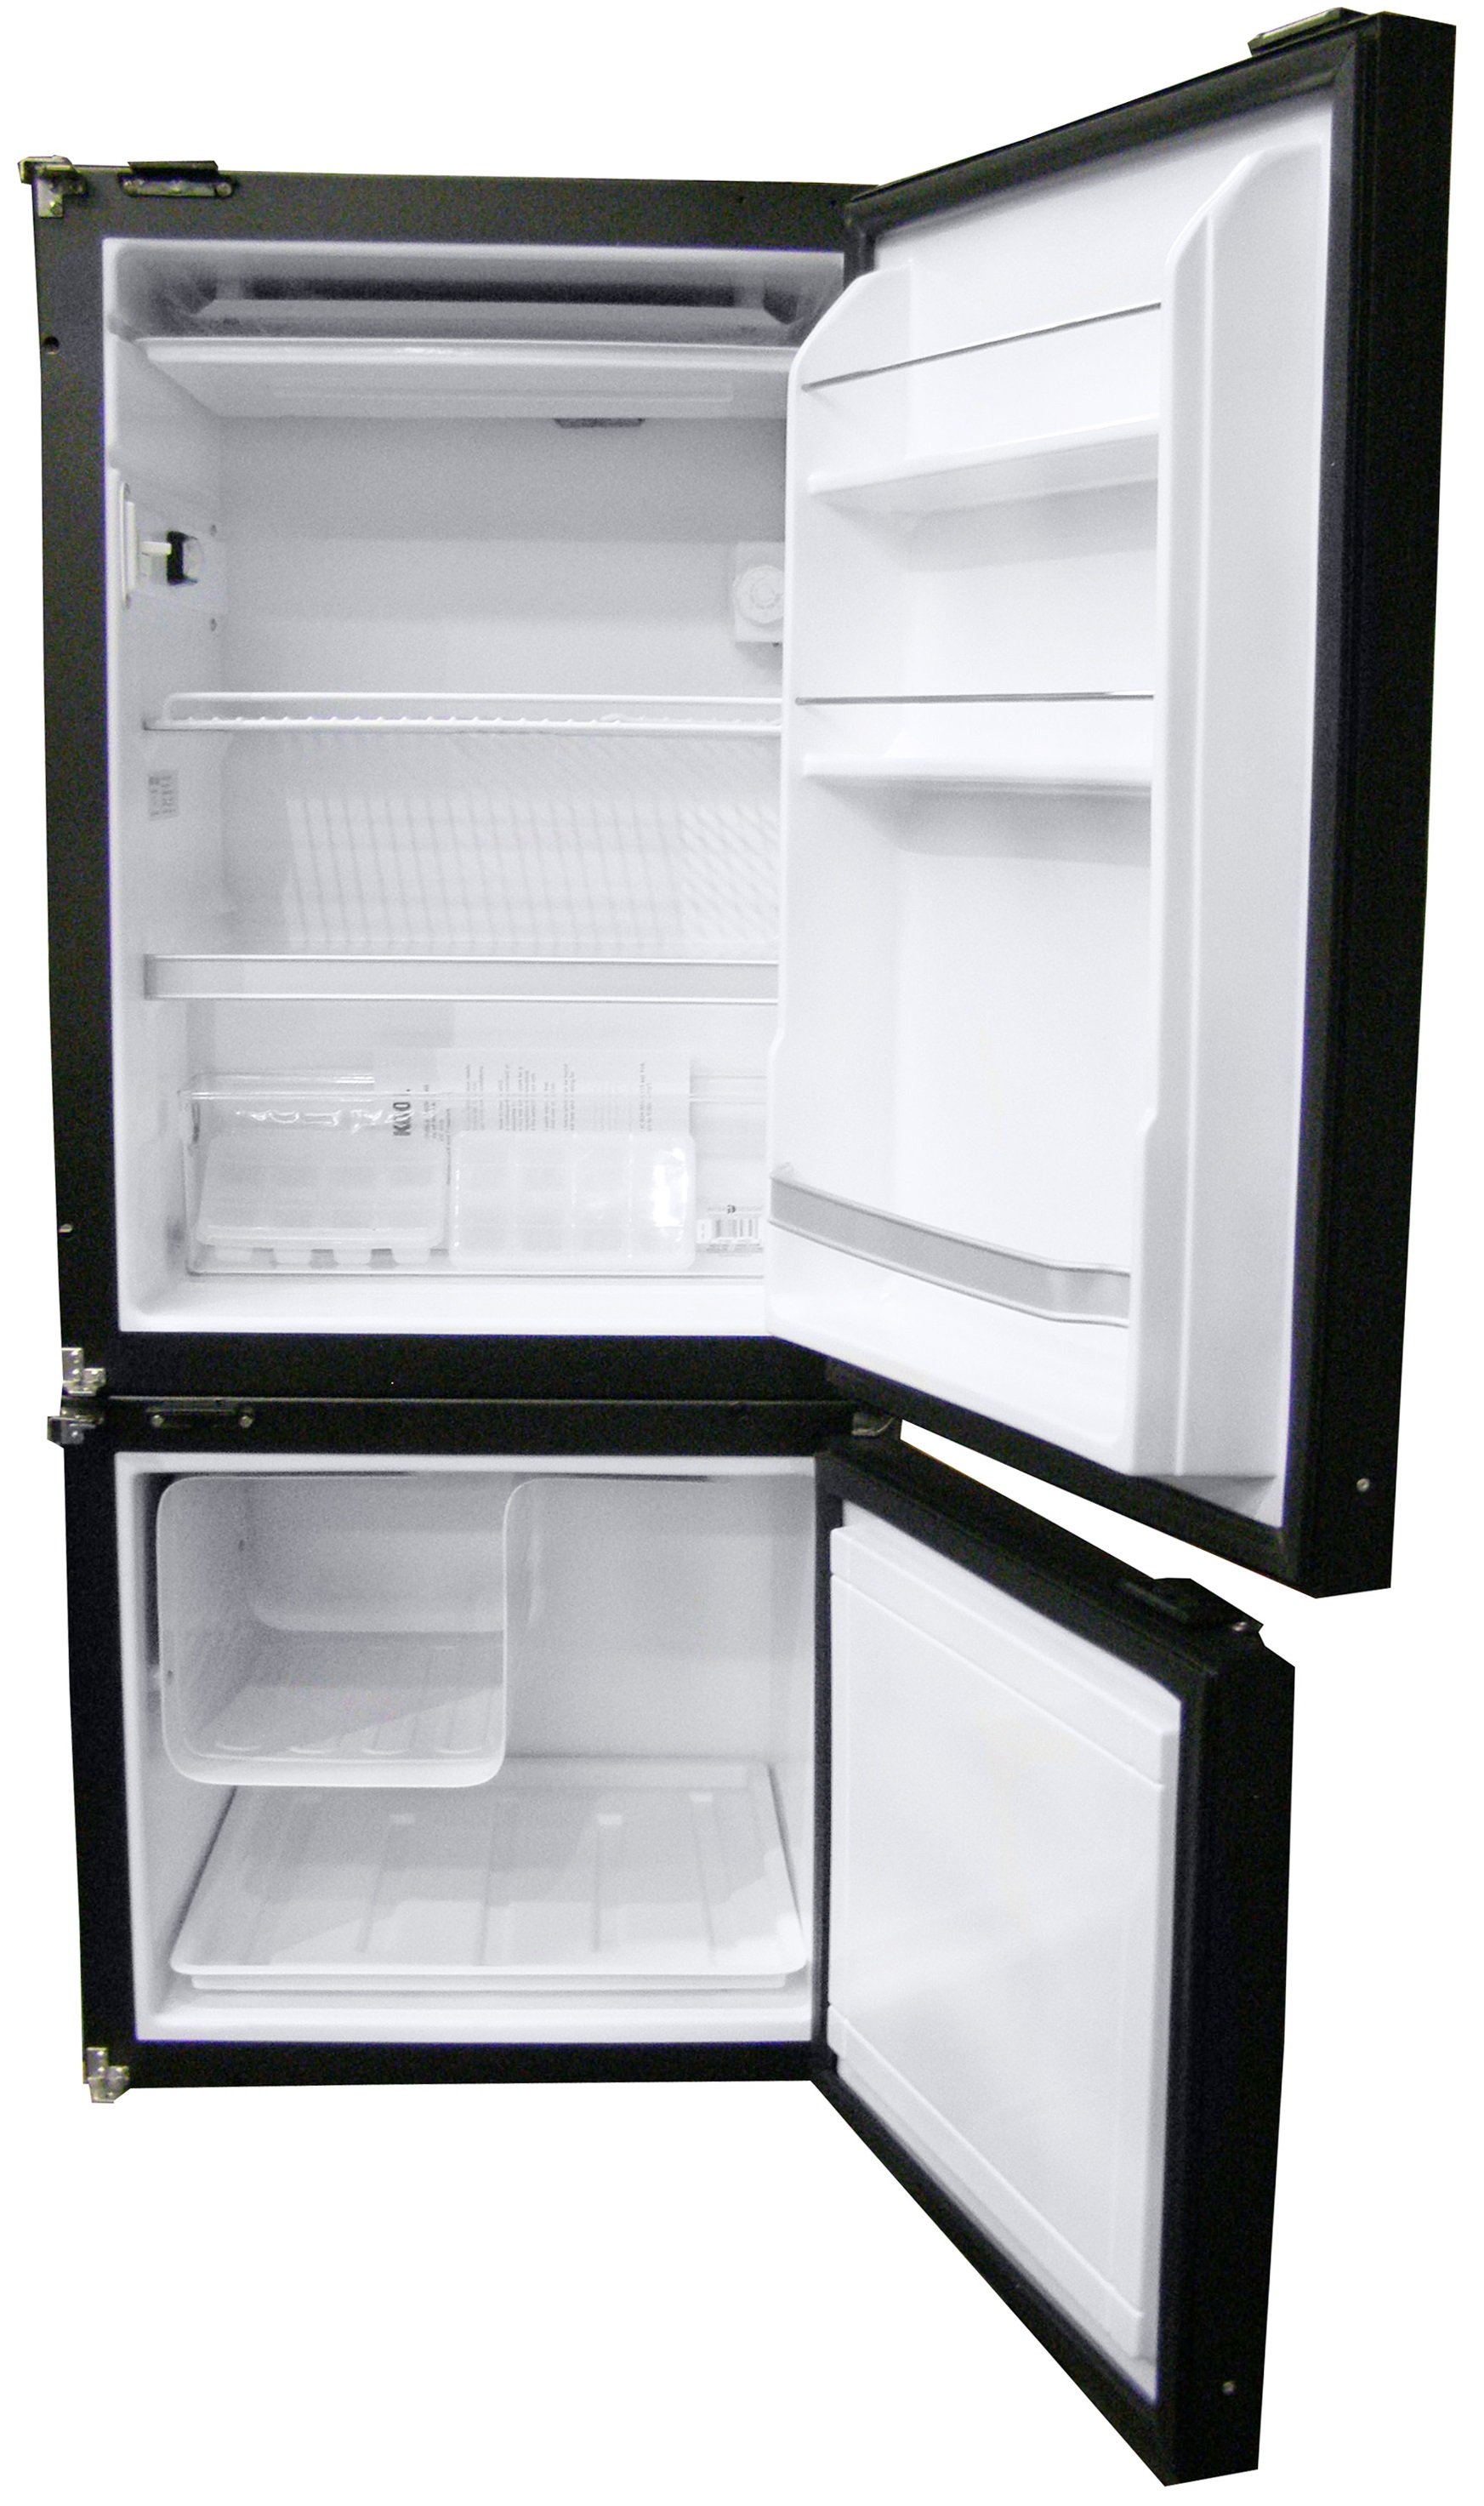 NovaKool RFU6200 Two door upright refrigerator and freezer